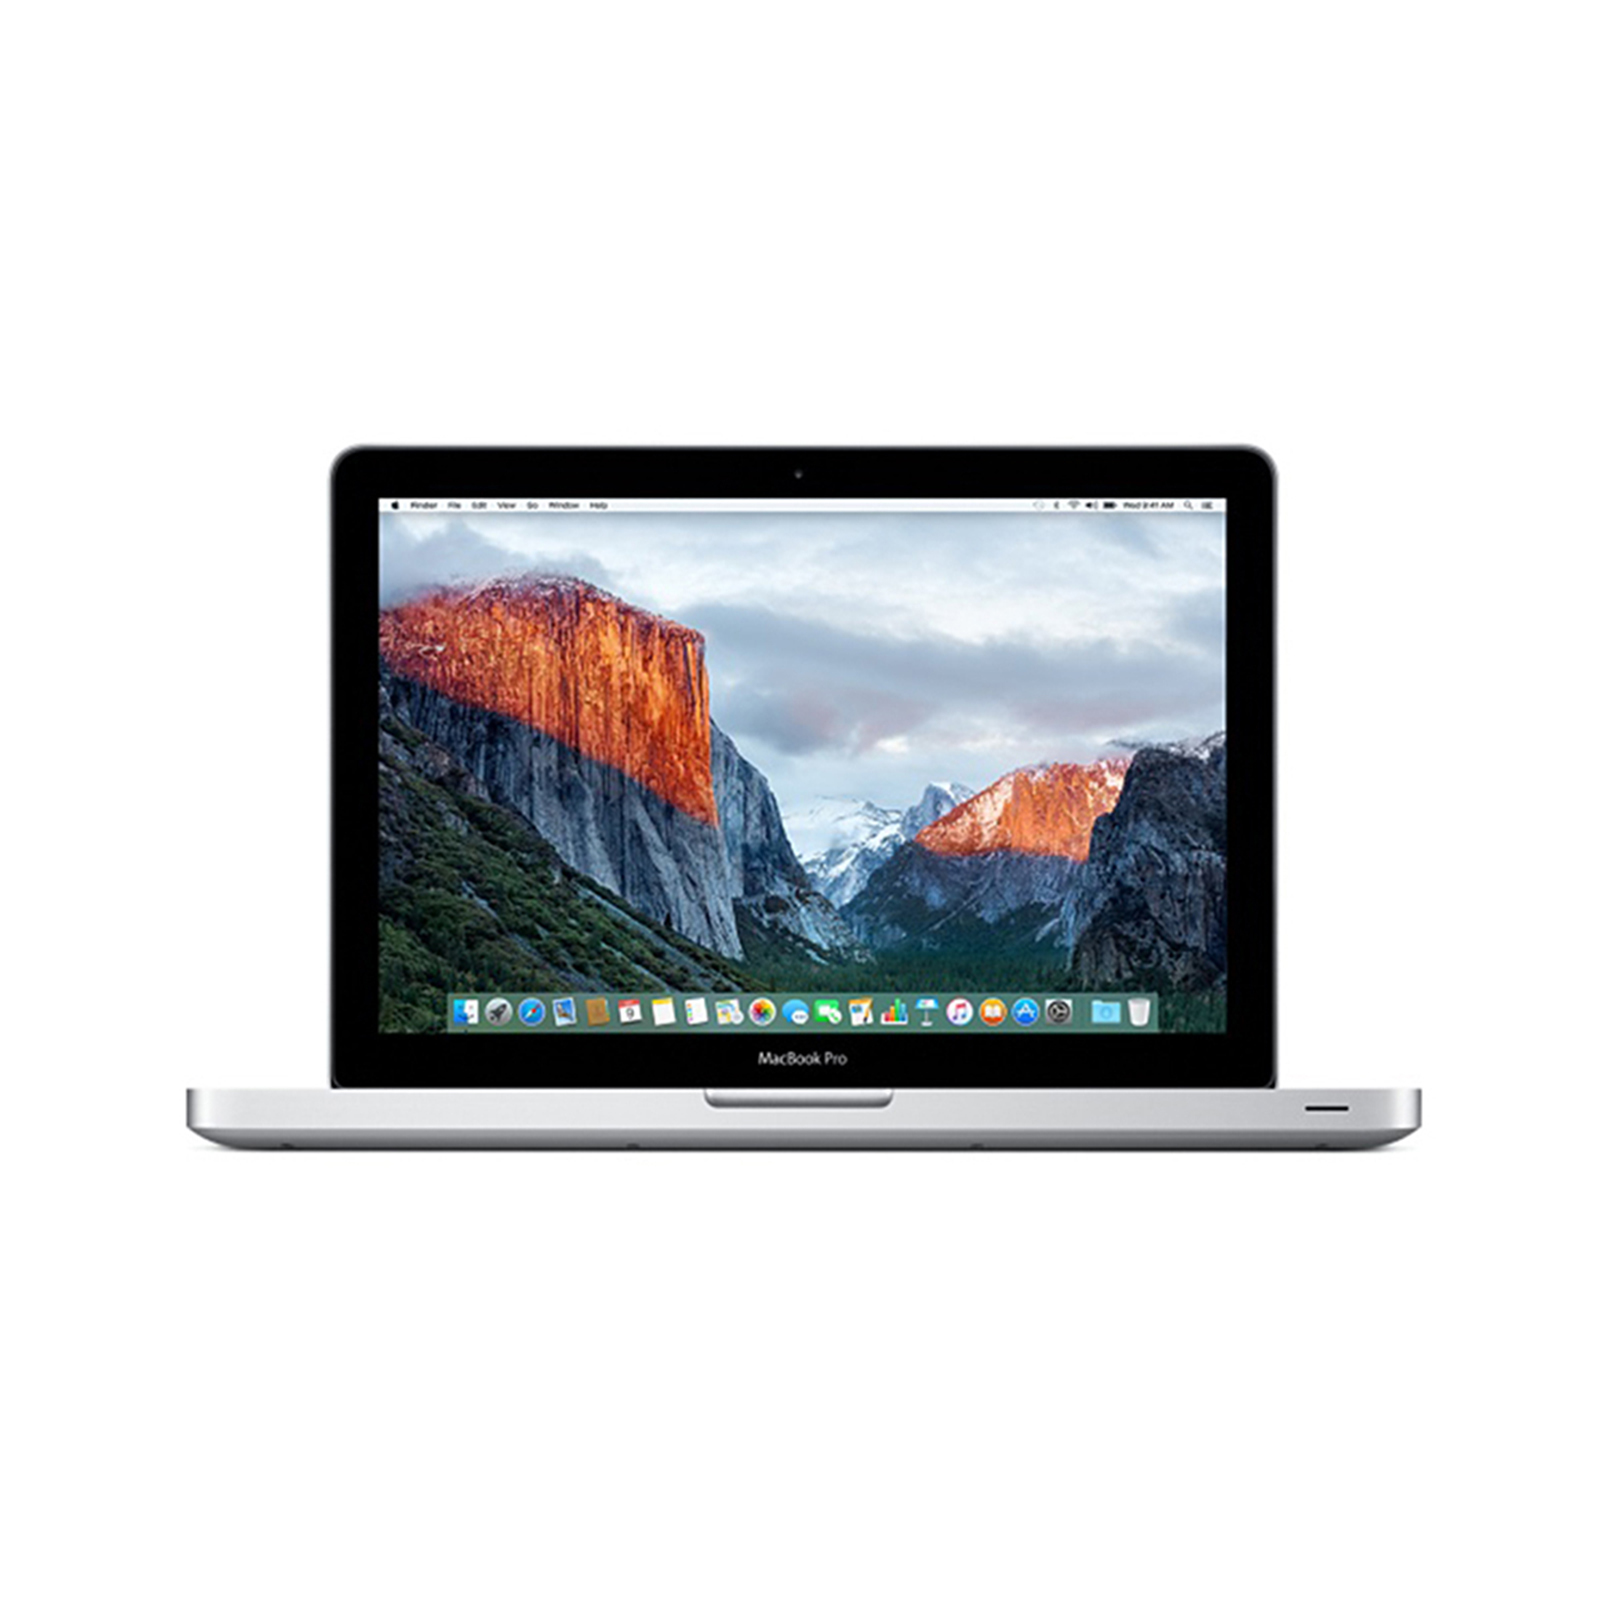 MacBook Pro (13-inch, Mid 2012) Intel Core i5 2.5 GHz 4GB 500GB